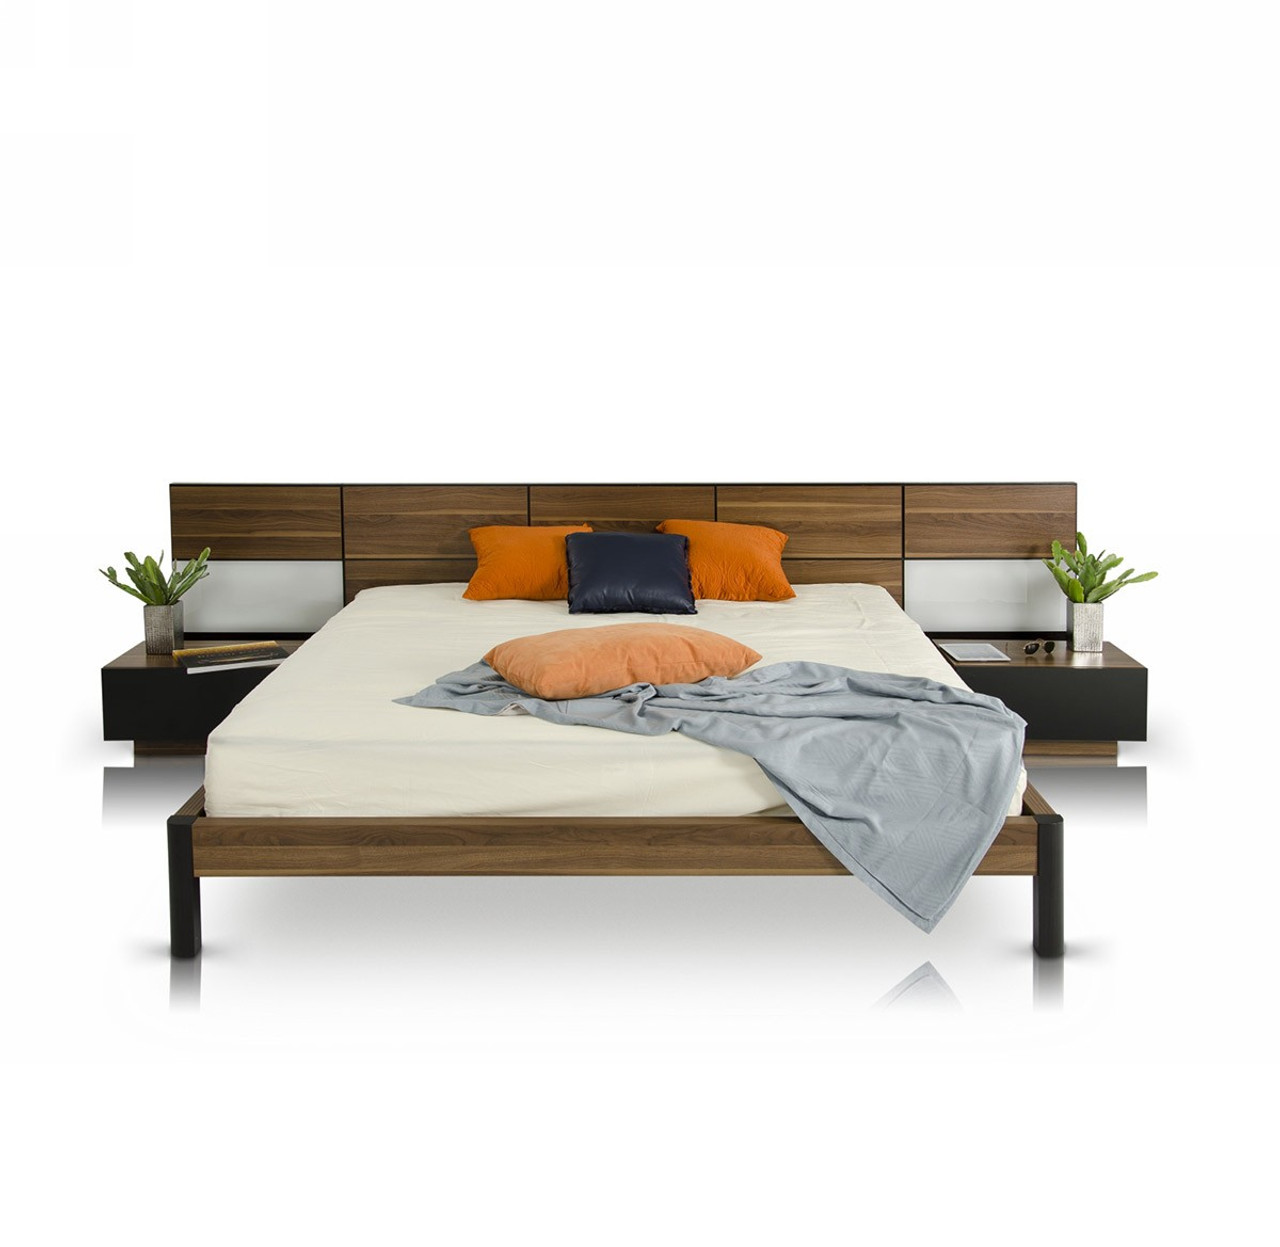 Modrest Rondo Modern Queen Size Bed With Nightstands Lounge La